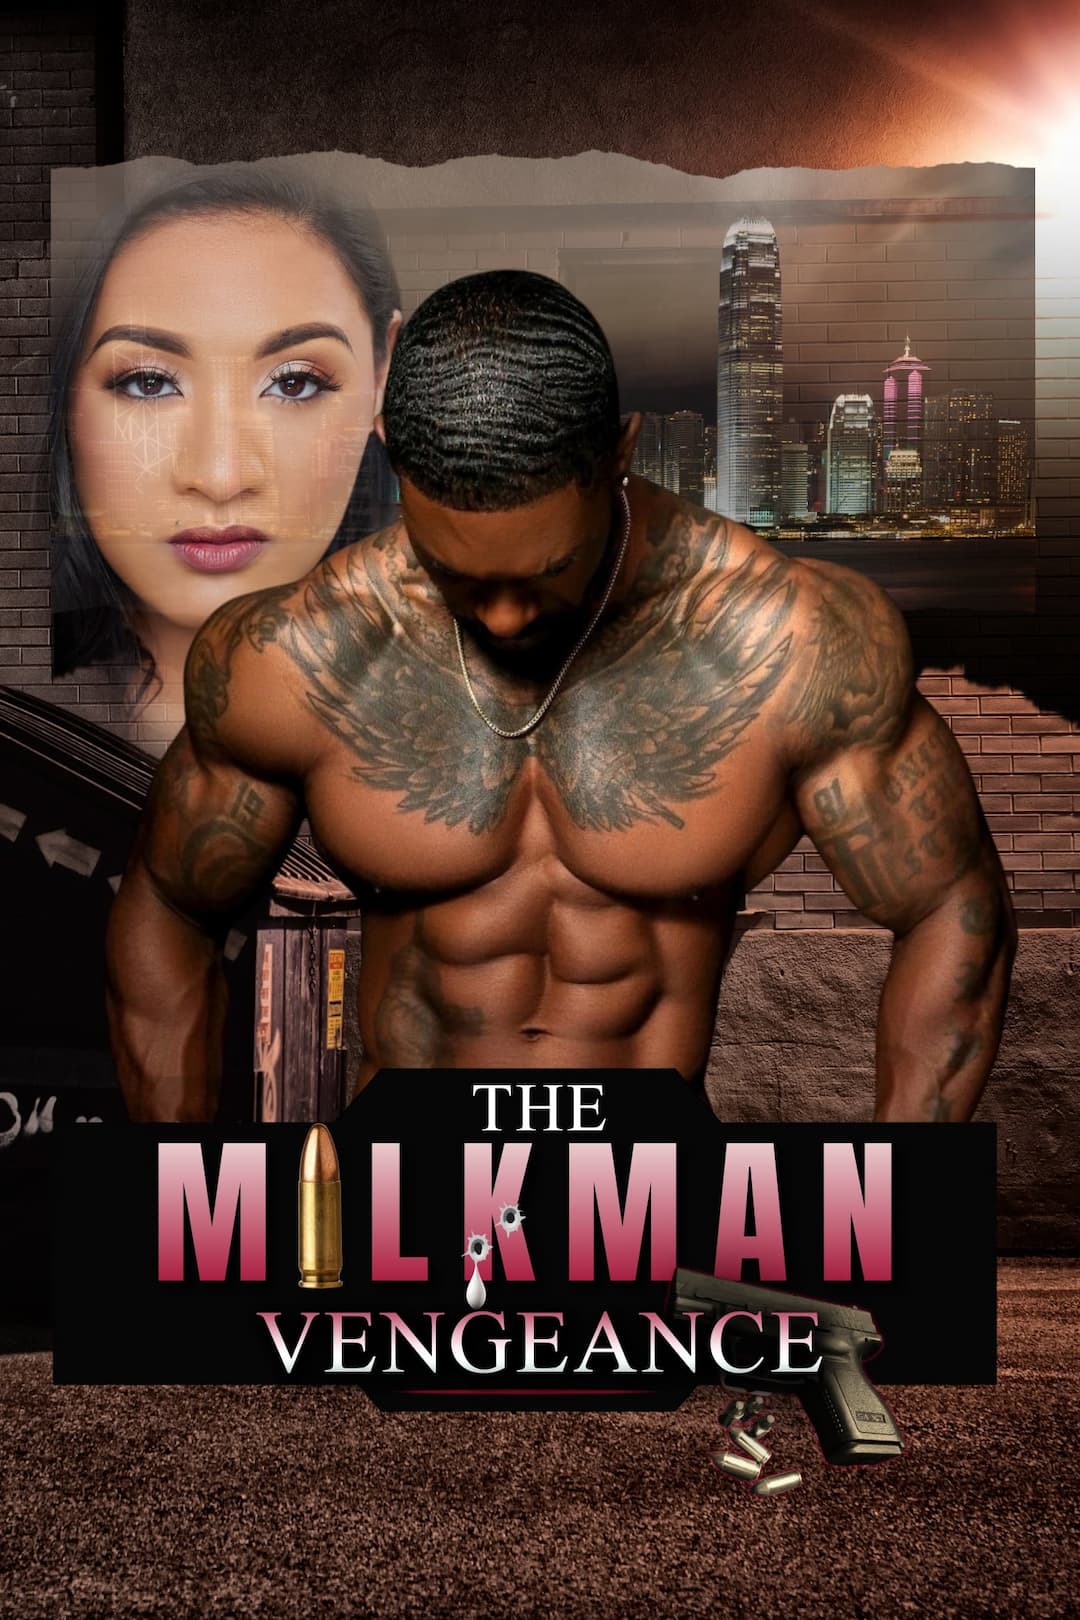 The Milkman: Vengeance